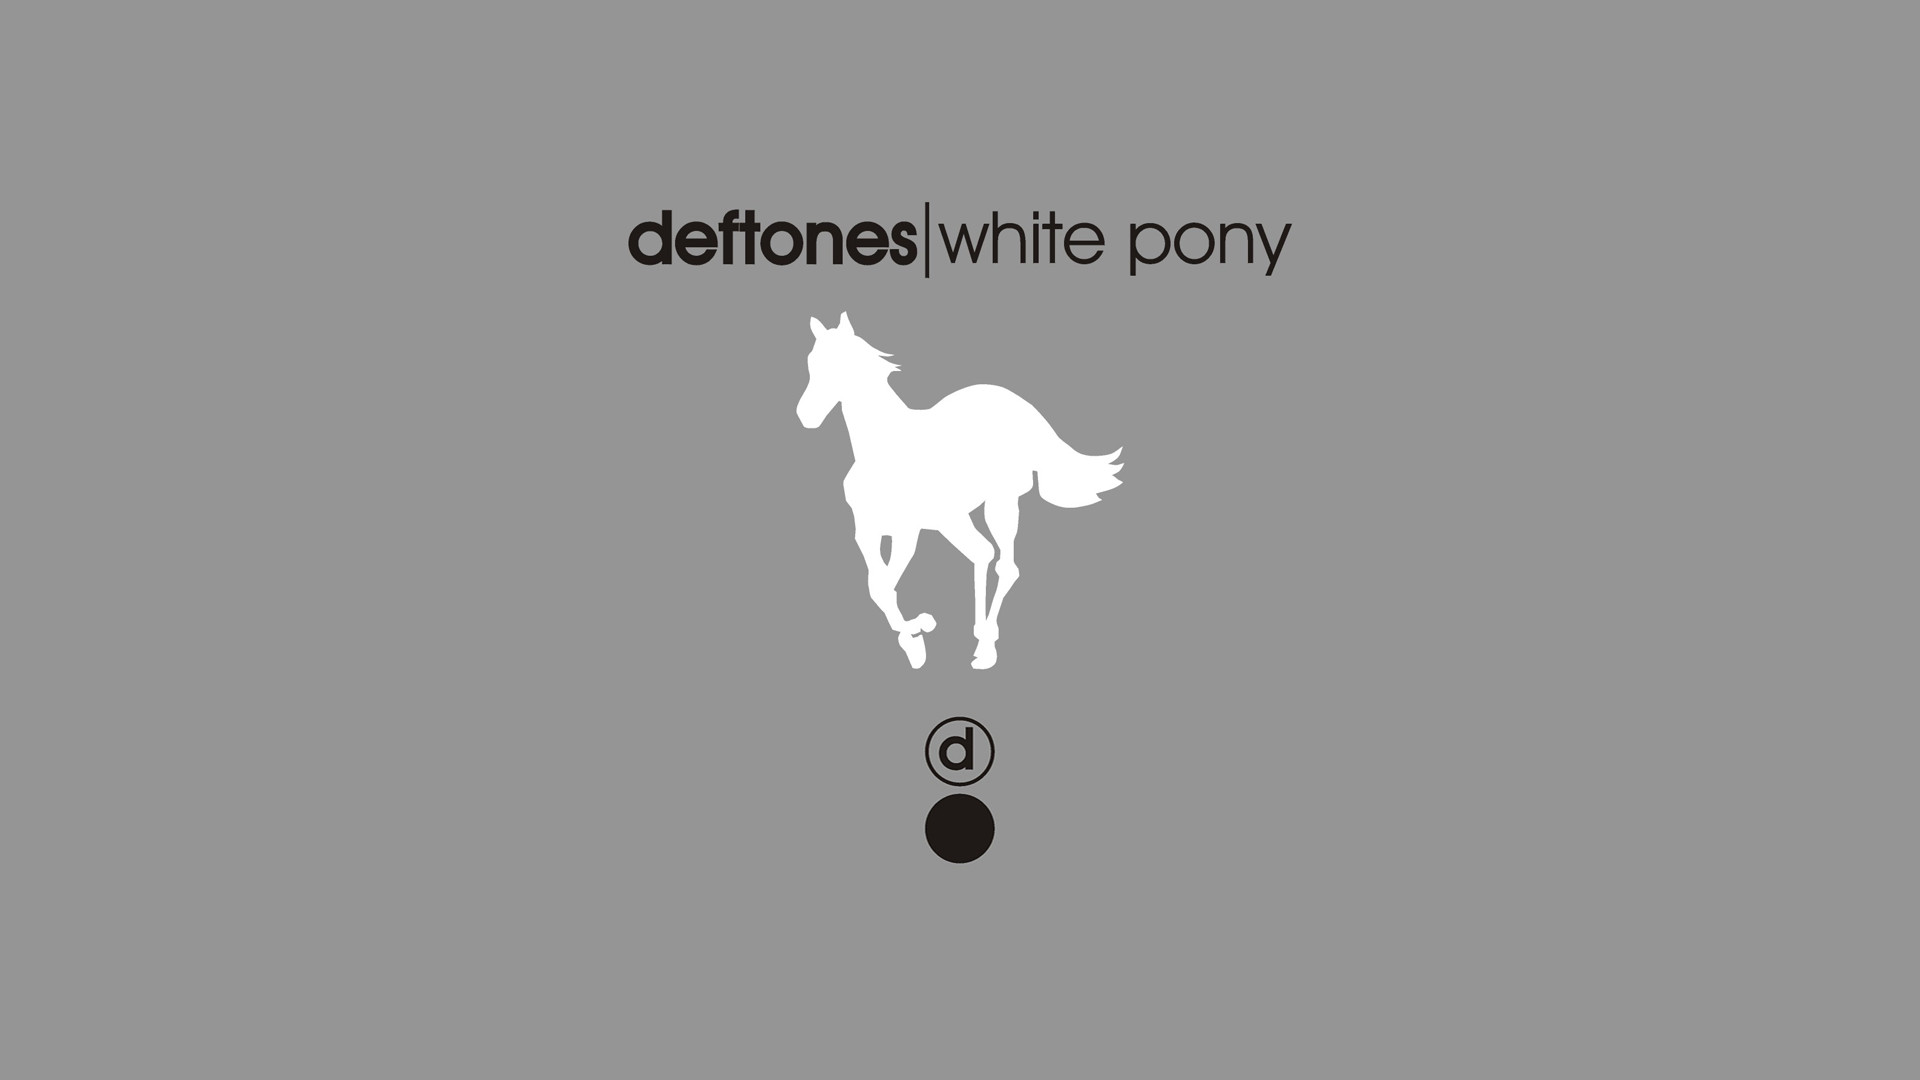 Deftones pony. Deftones - White Pony (2000). Deftones White Pony обложка. Deftones — White Pony (2000) обложка. Deftones обои на рабочий стол.